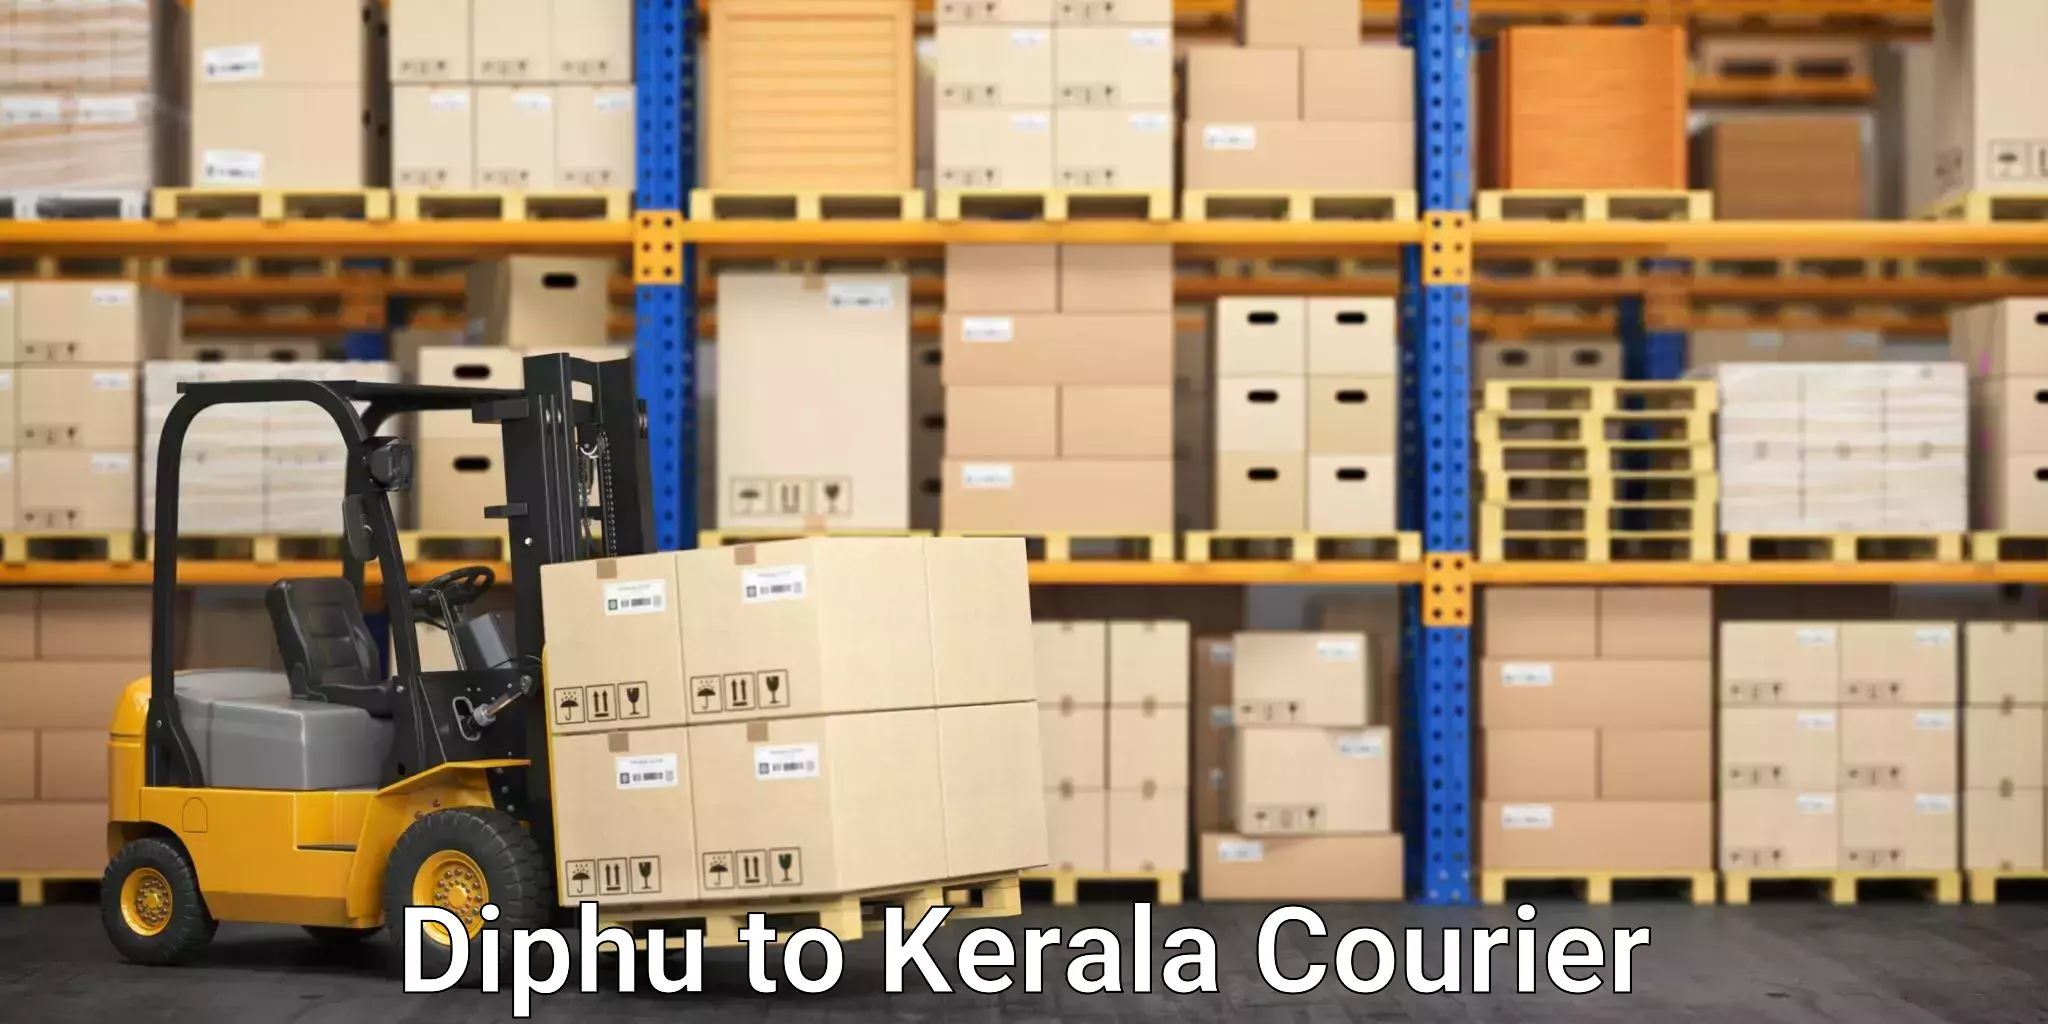 Multi-city courier Diphu to Cochin Port Kochi